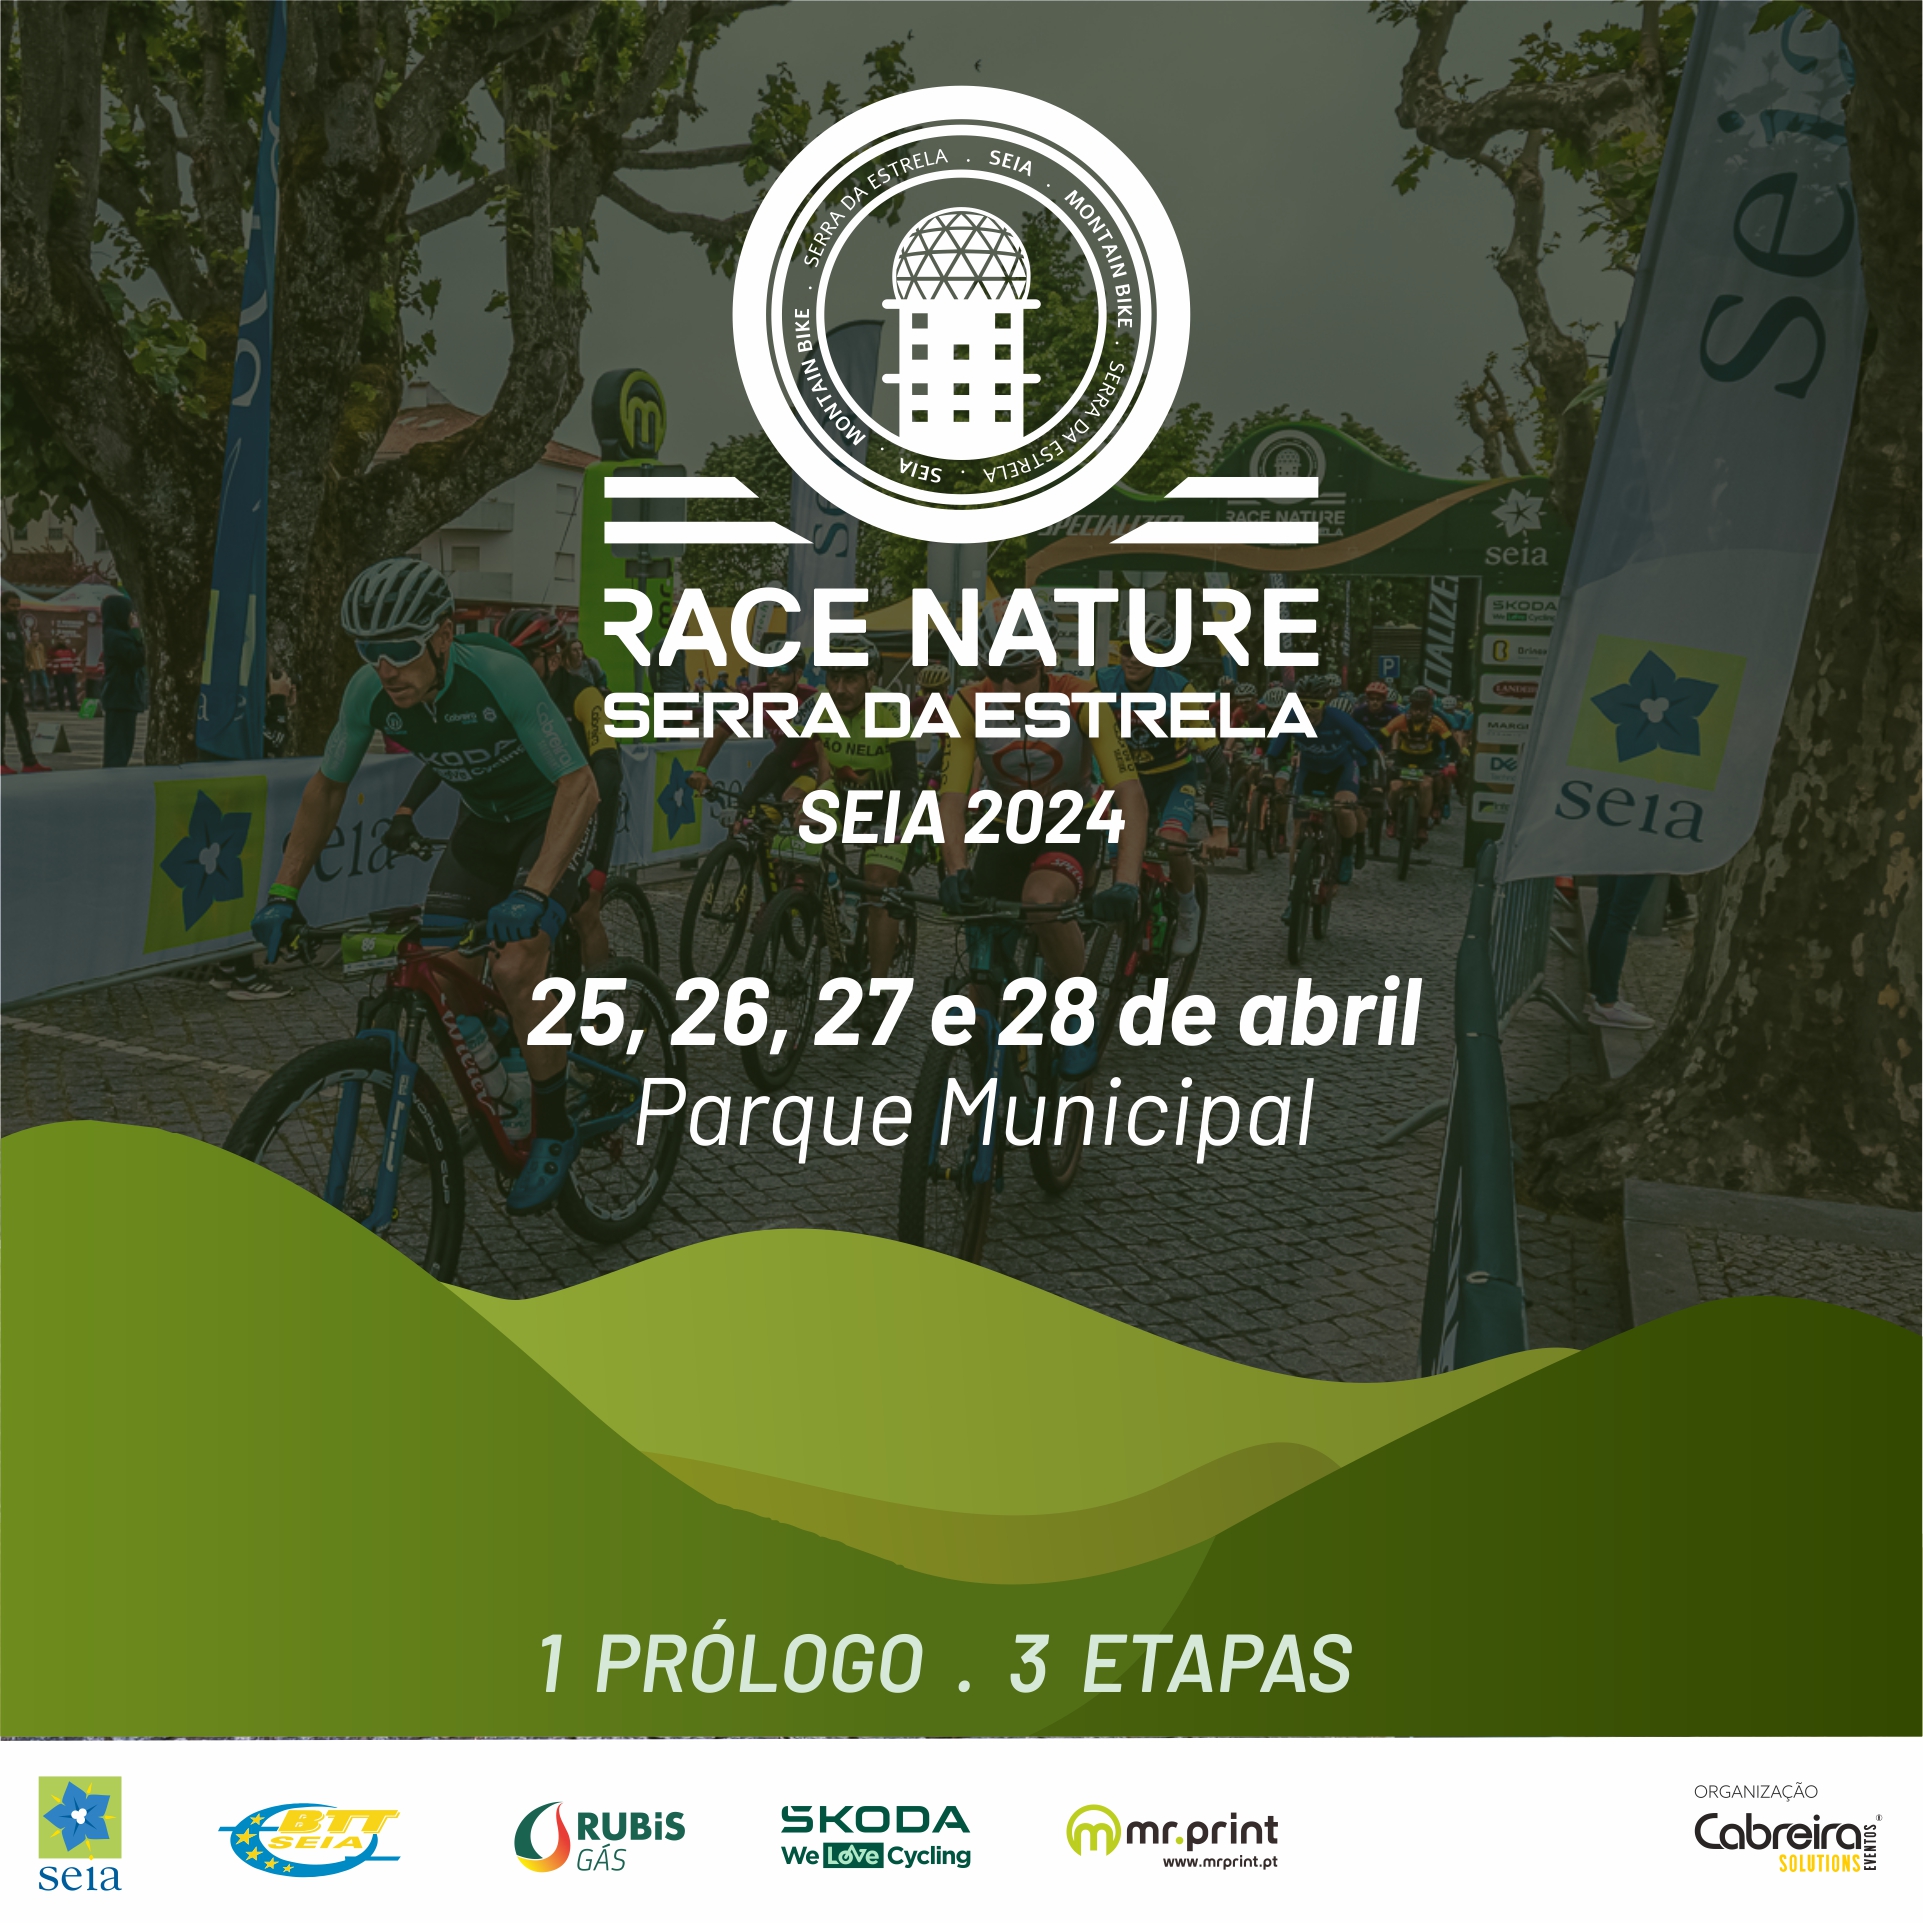 2.ª etapa do Troféu Nacional Race Nature